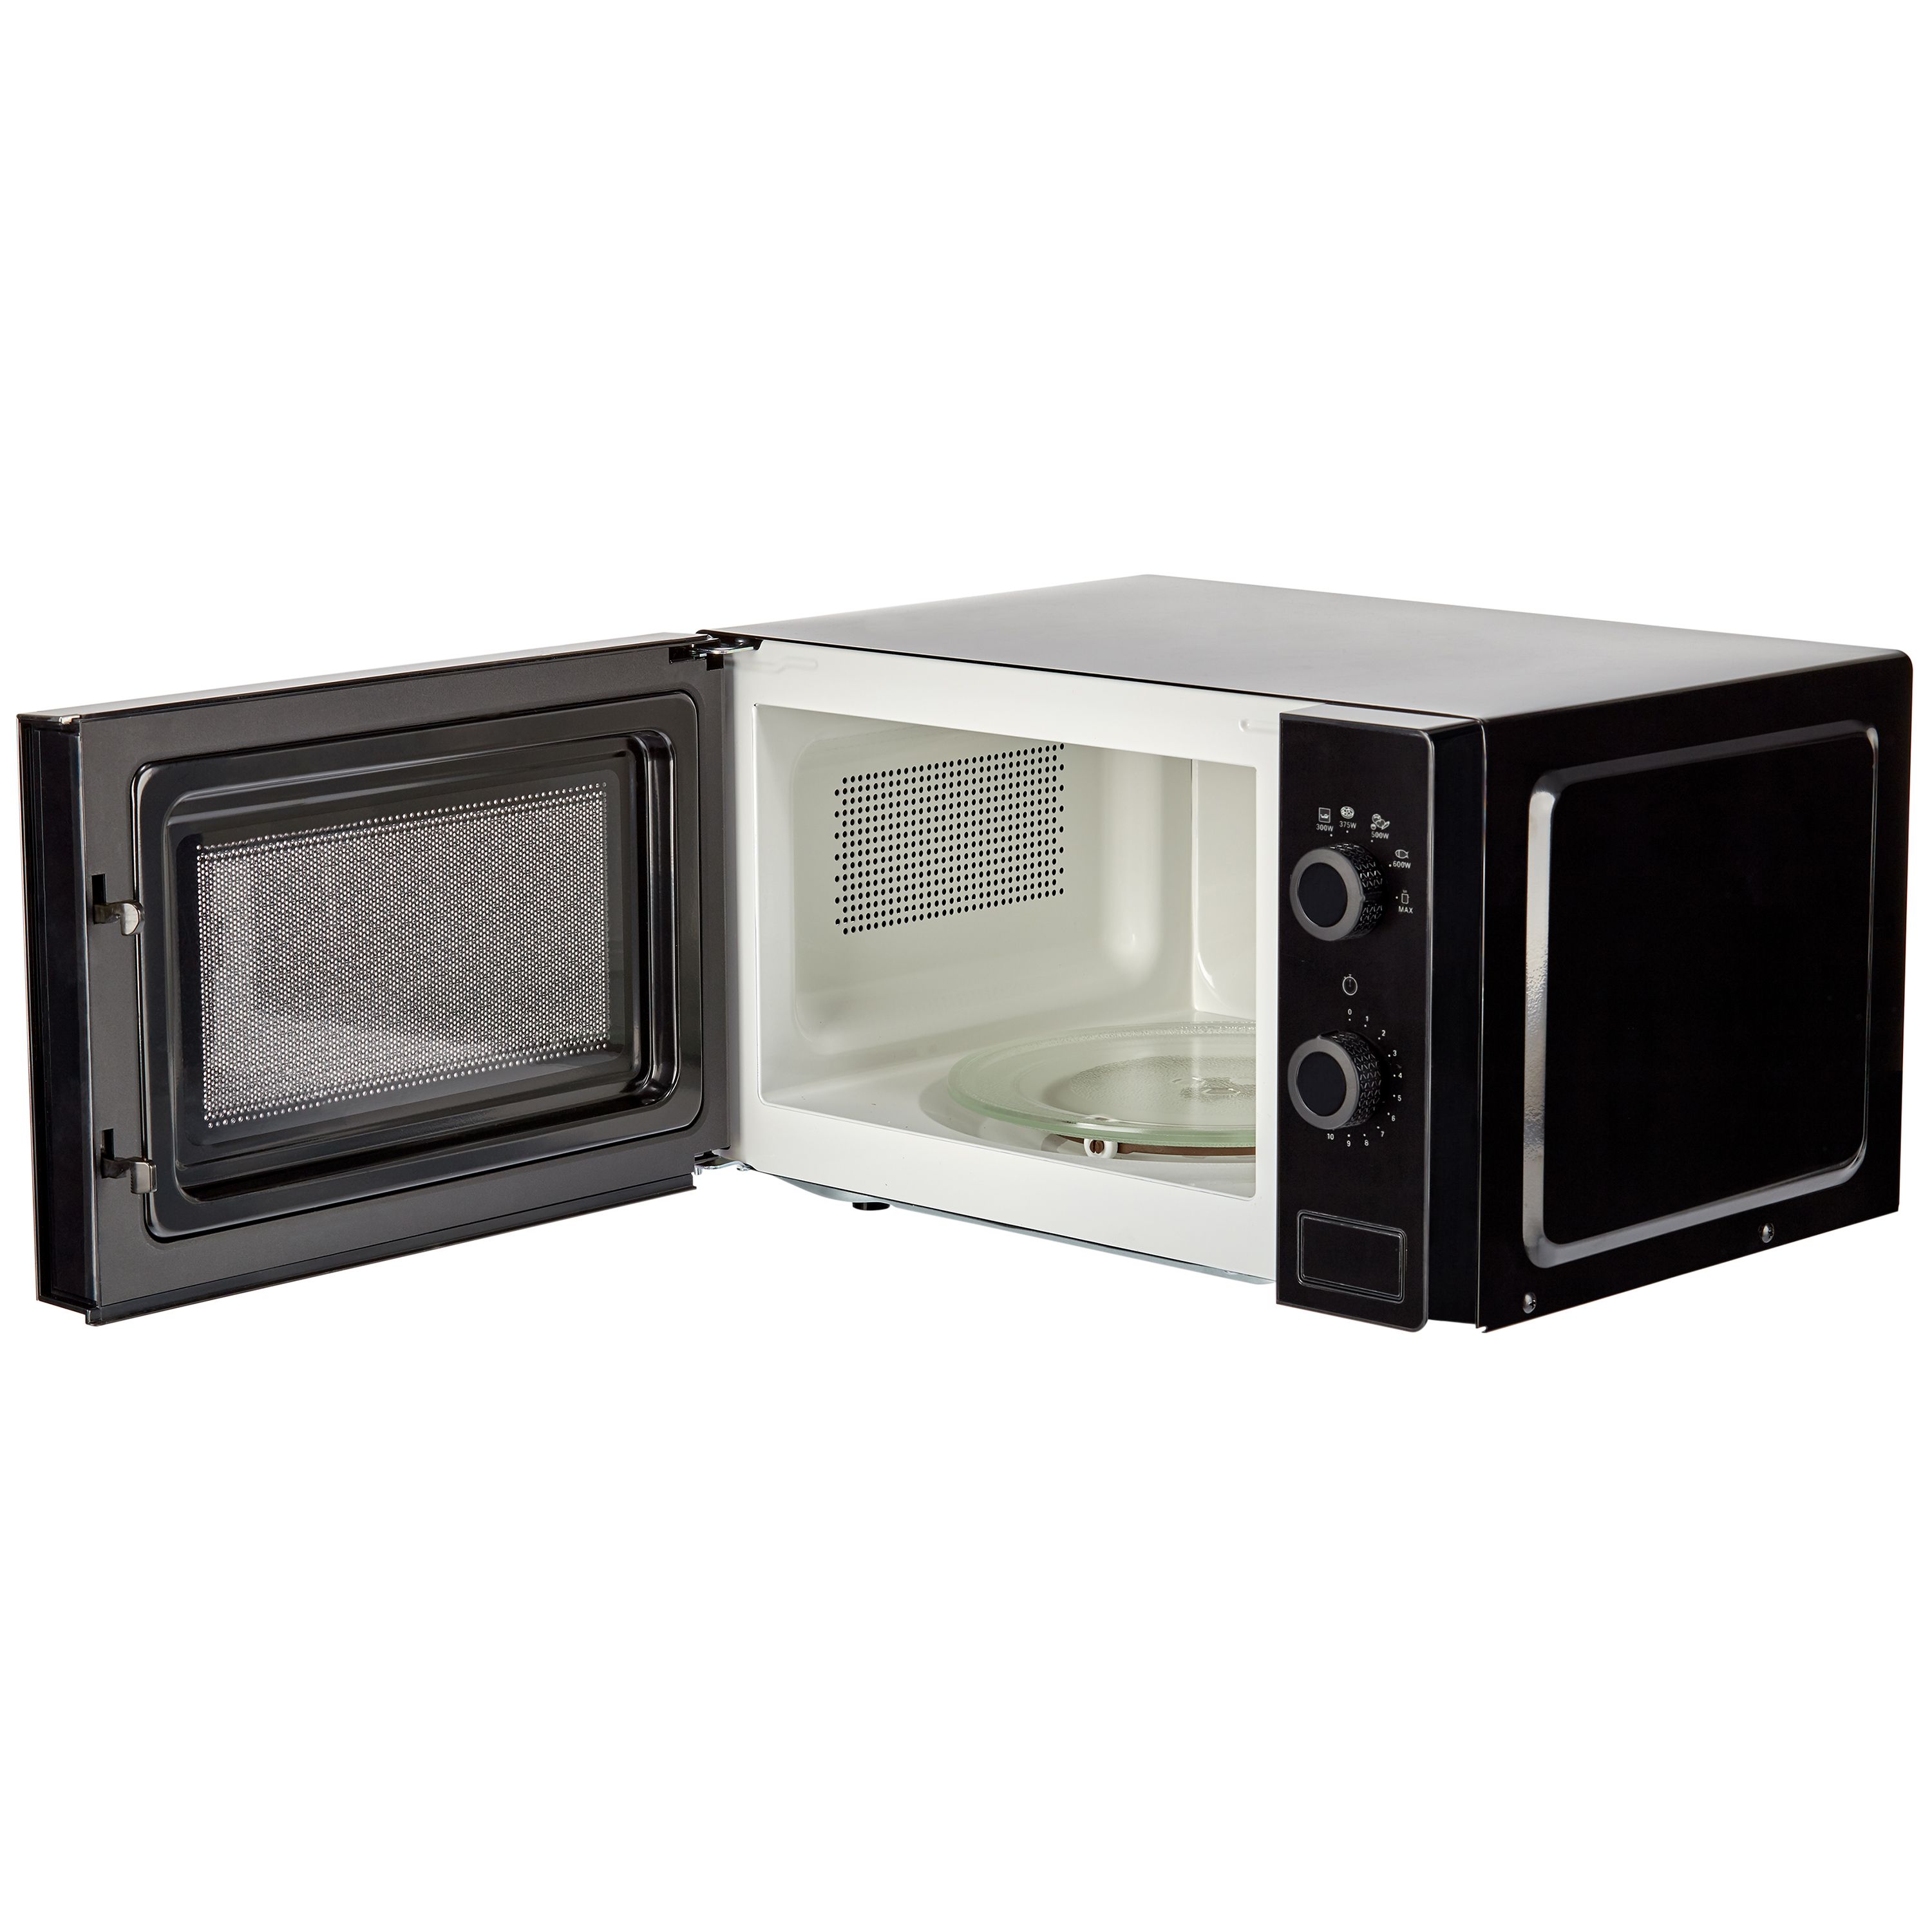 Hotpoint Cook 20 MWH 101 B_BK 20L Freestanding Microwave - Black